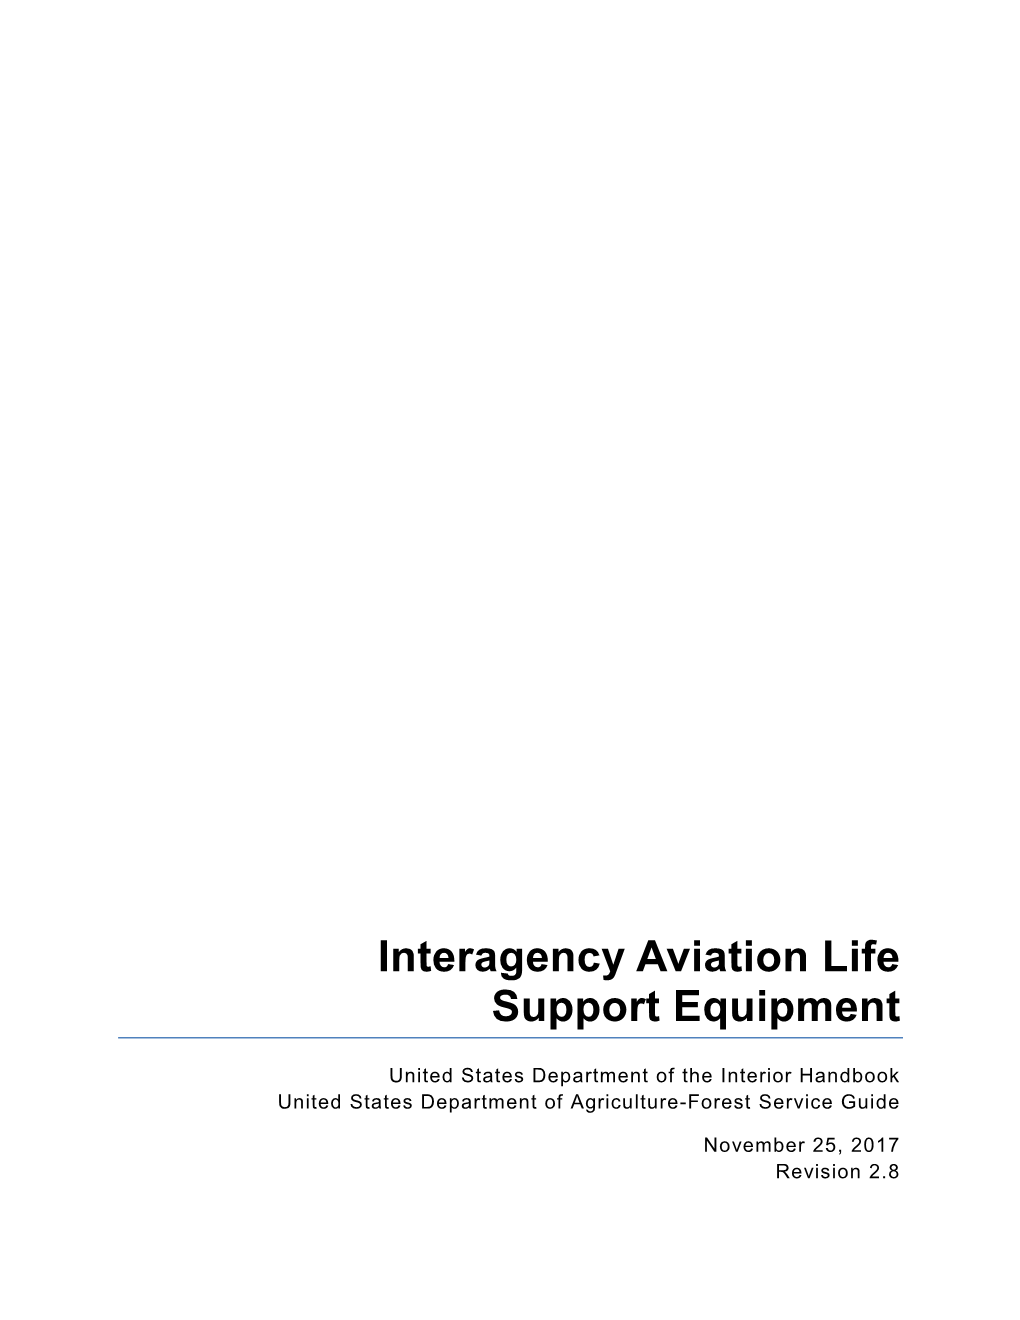 Interagency ALSE Handbook/Guide